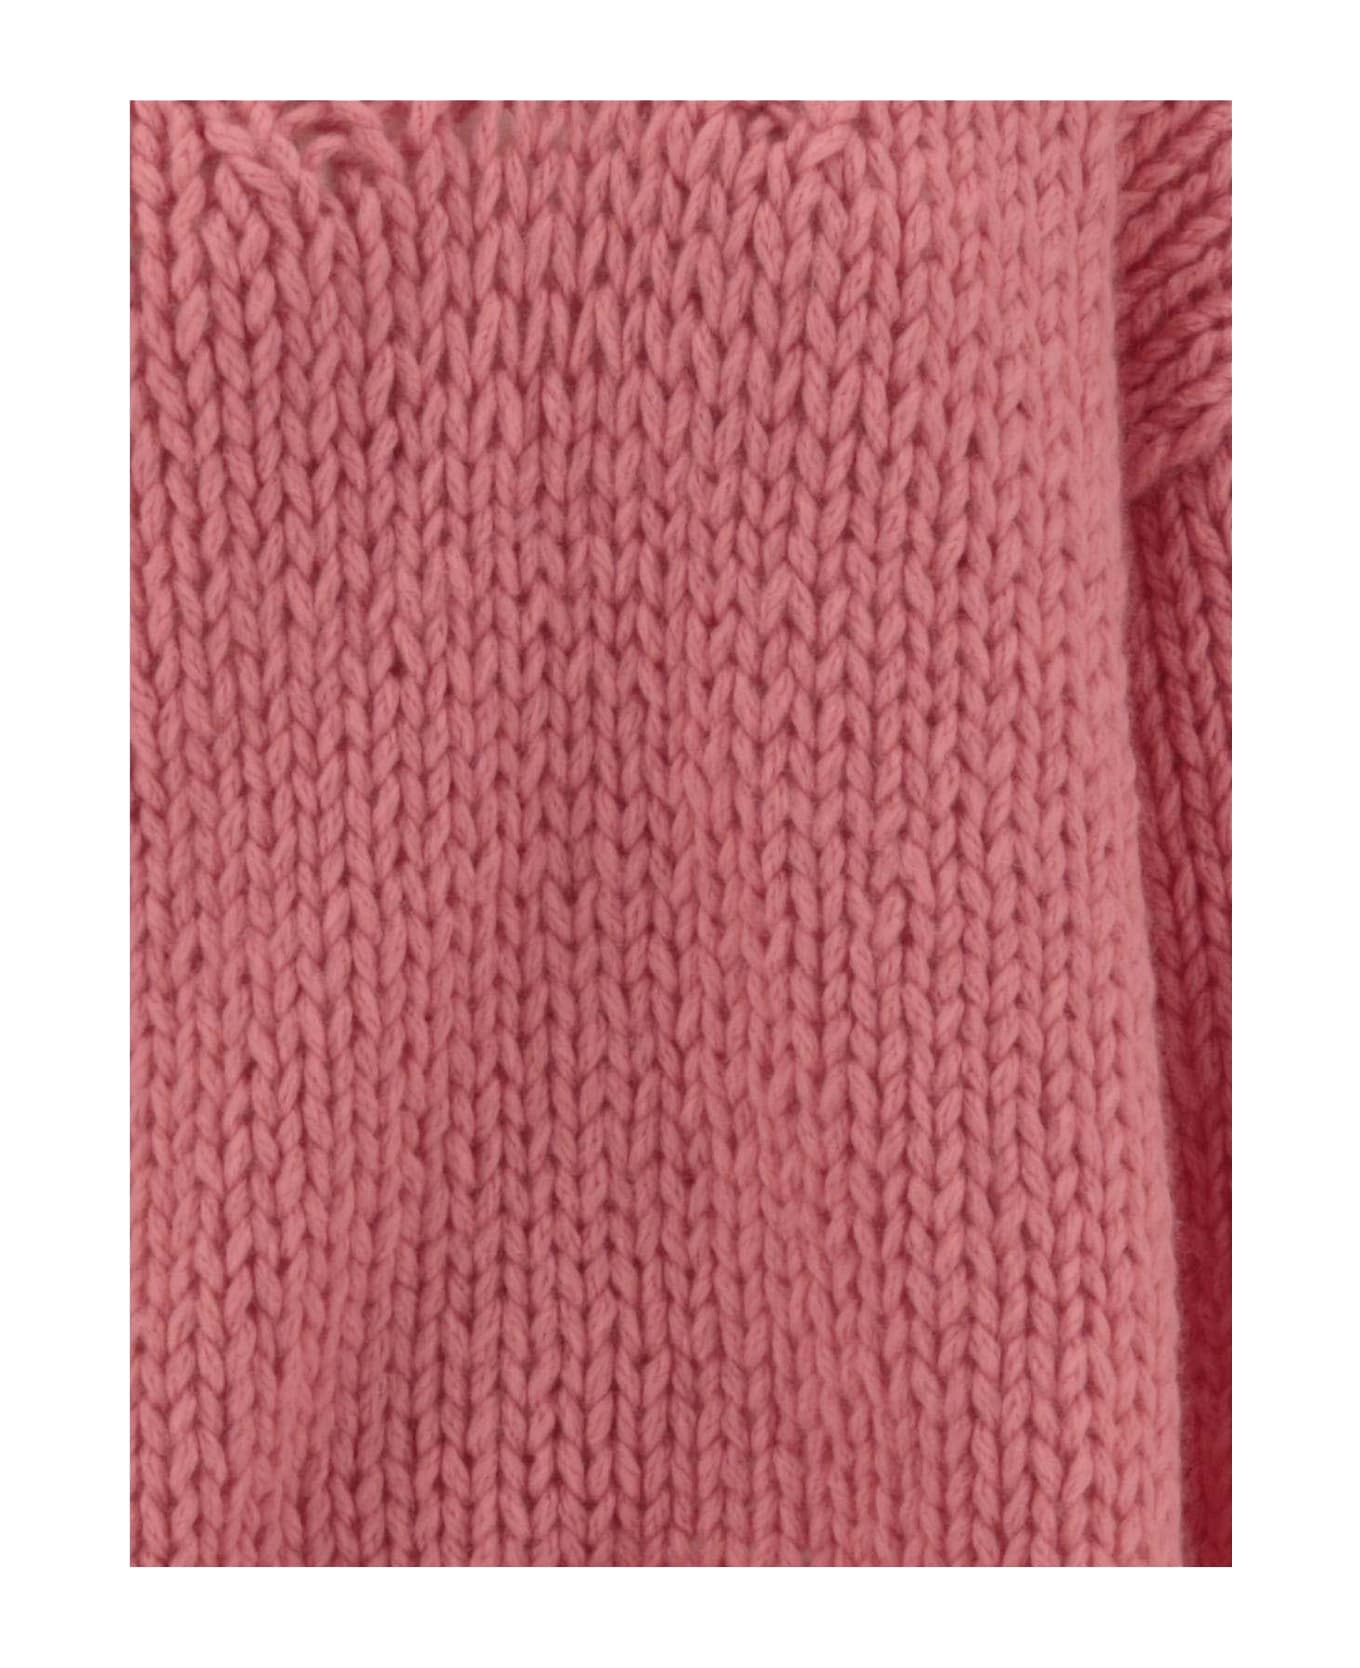 Evyinit Merino Wool Blend Sweater - Pink